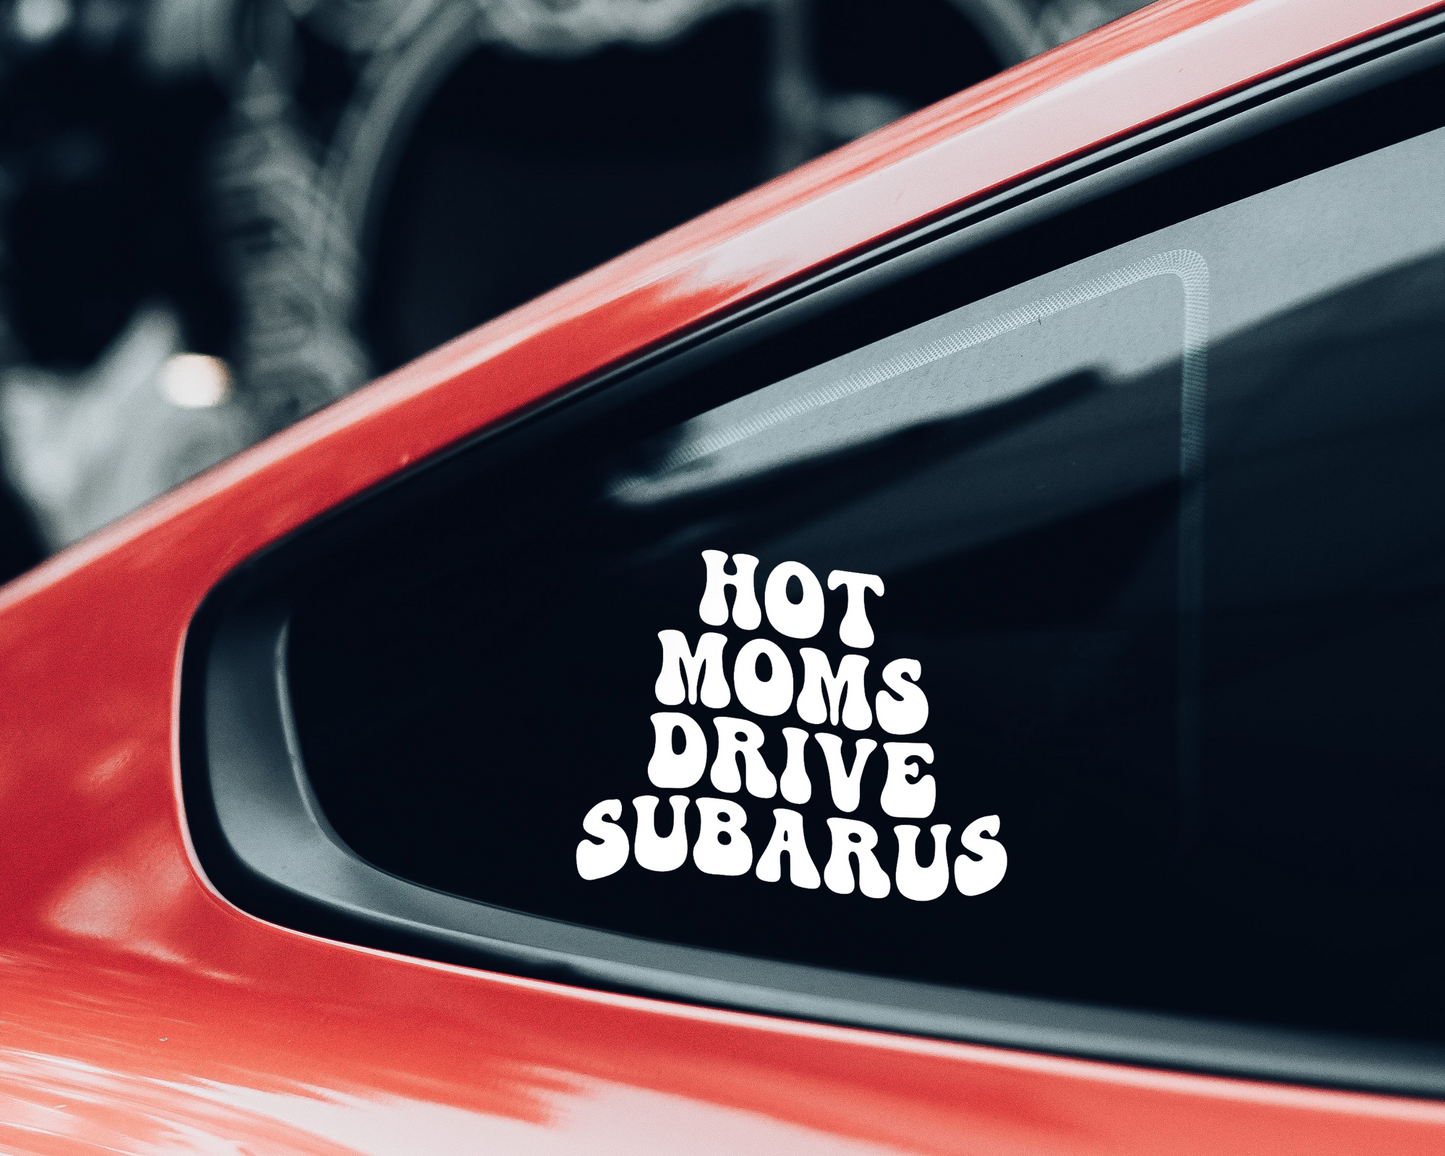 Hot Moms Drive Subarus